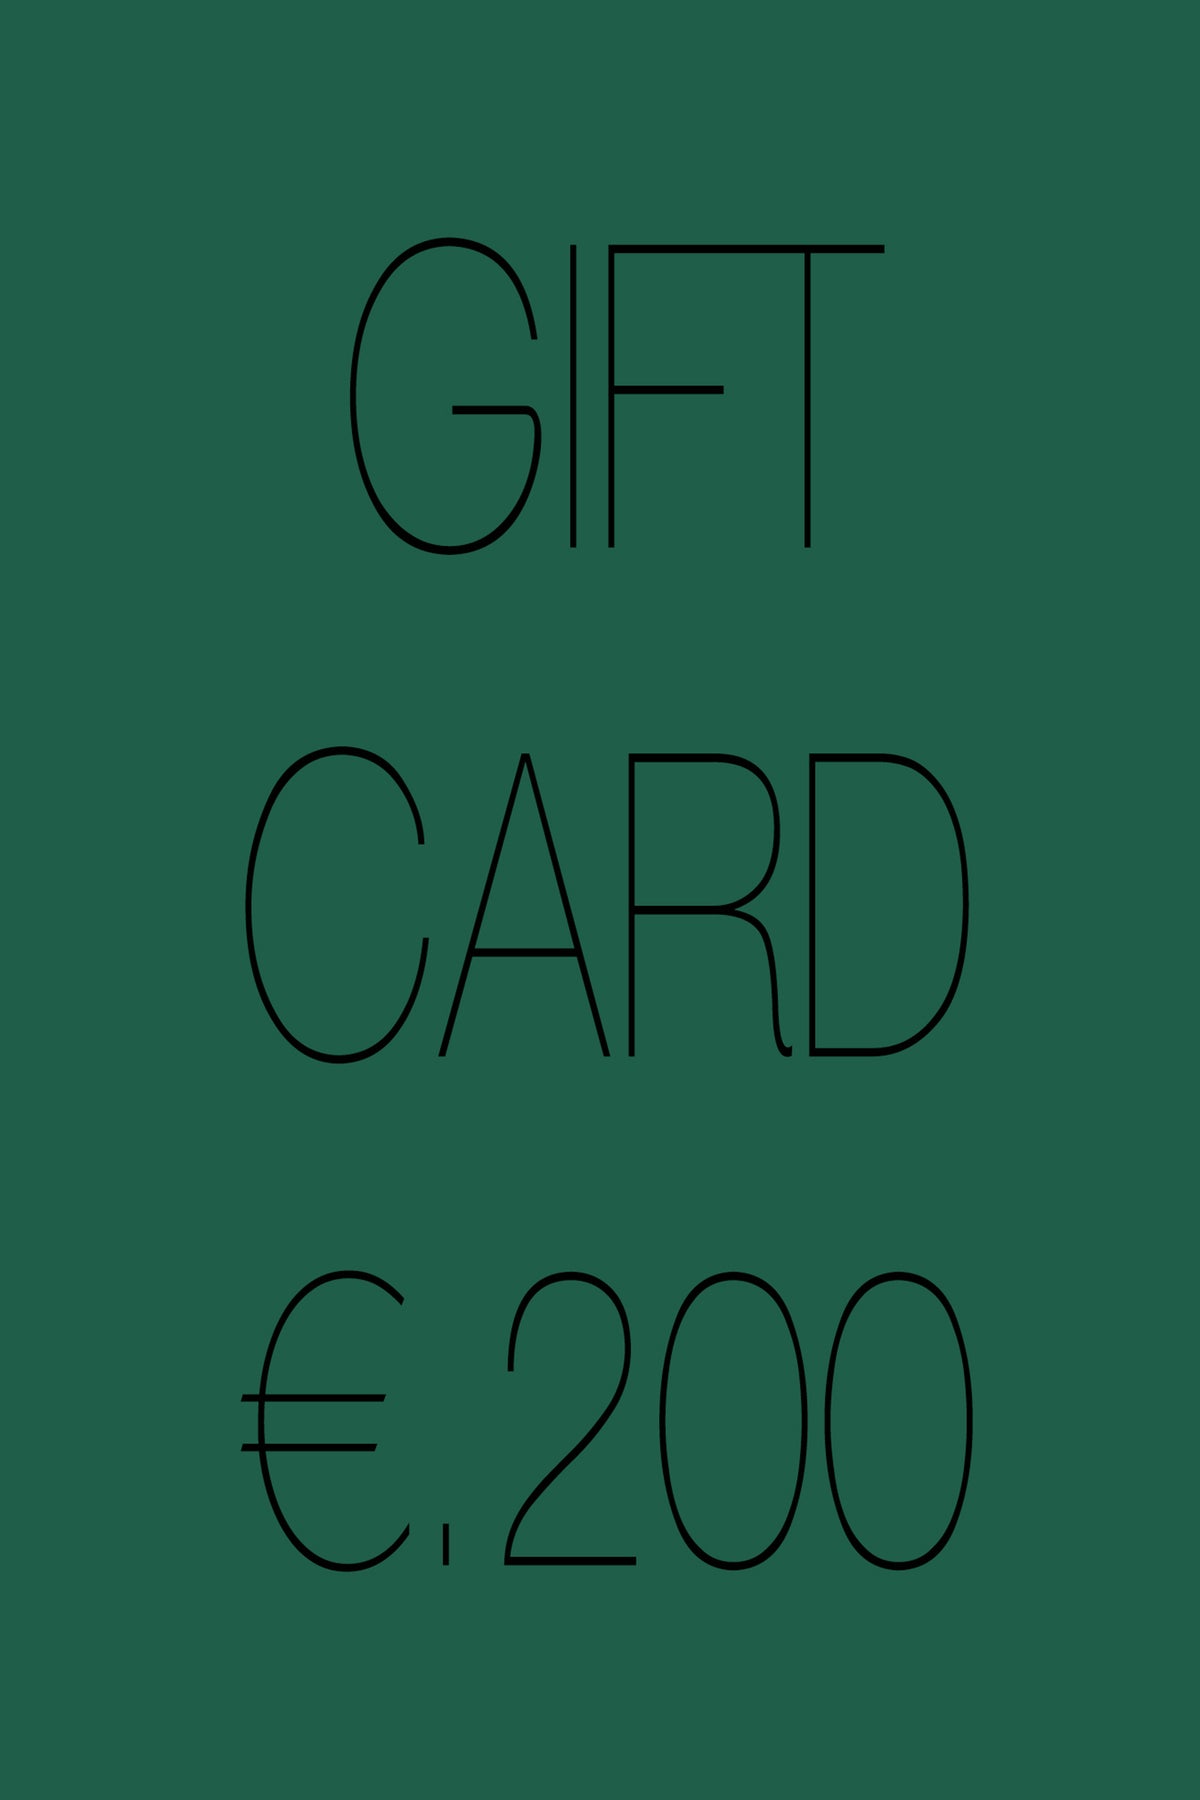 GIFT CARD €200.00